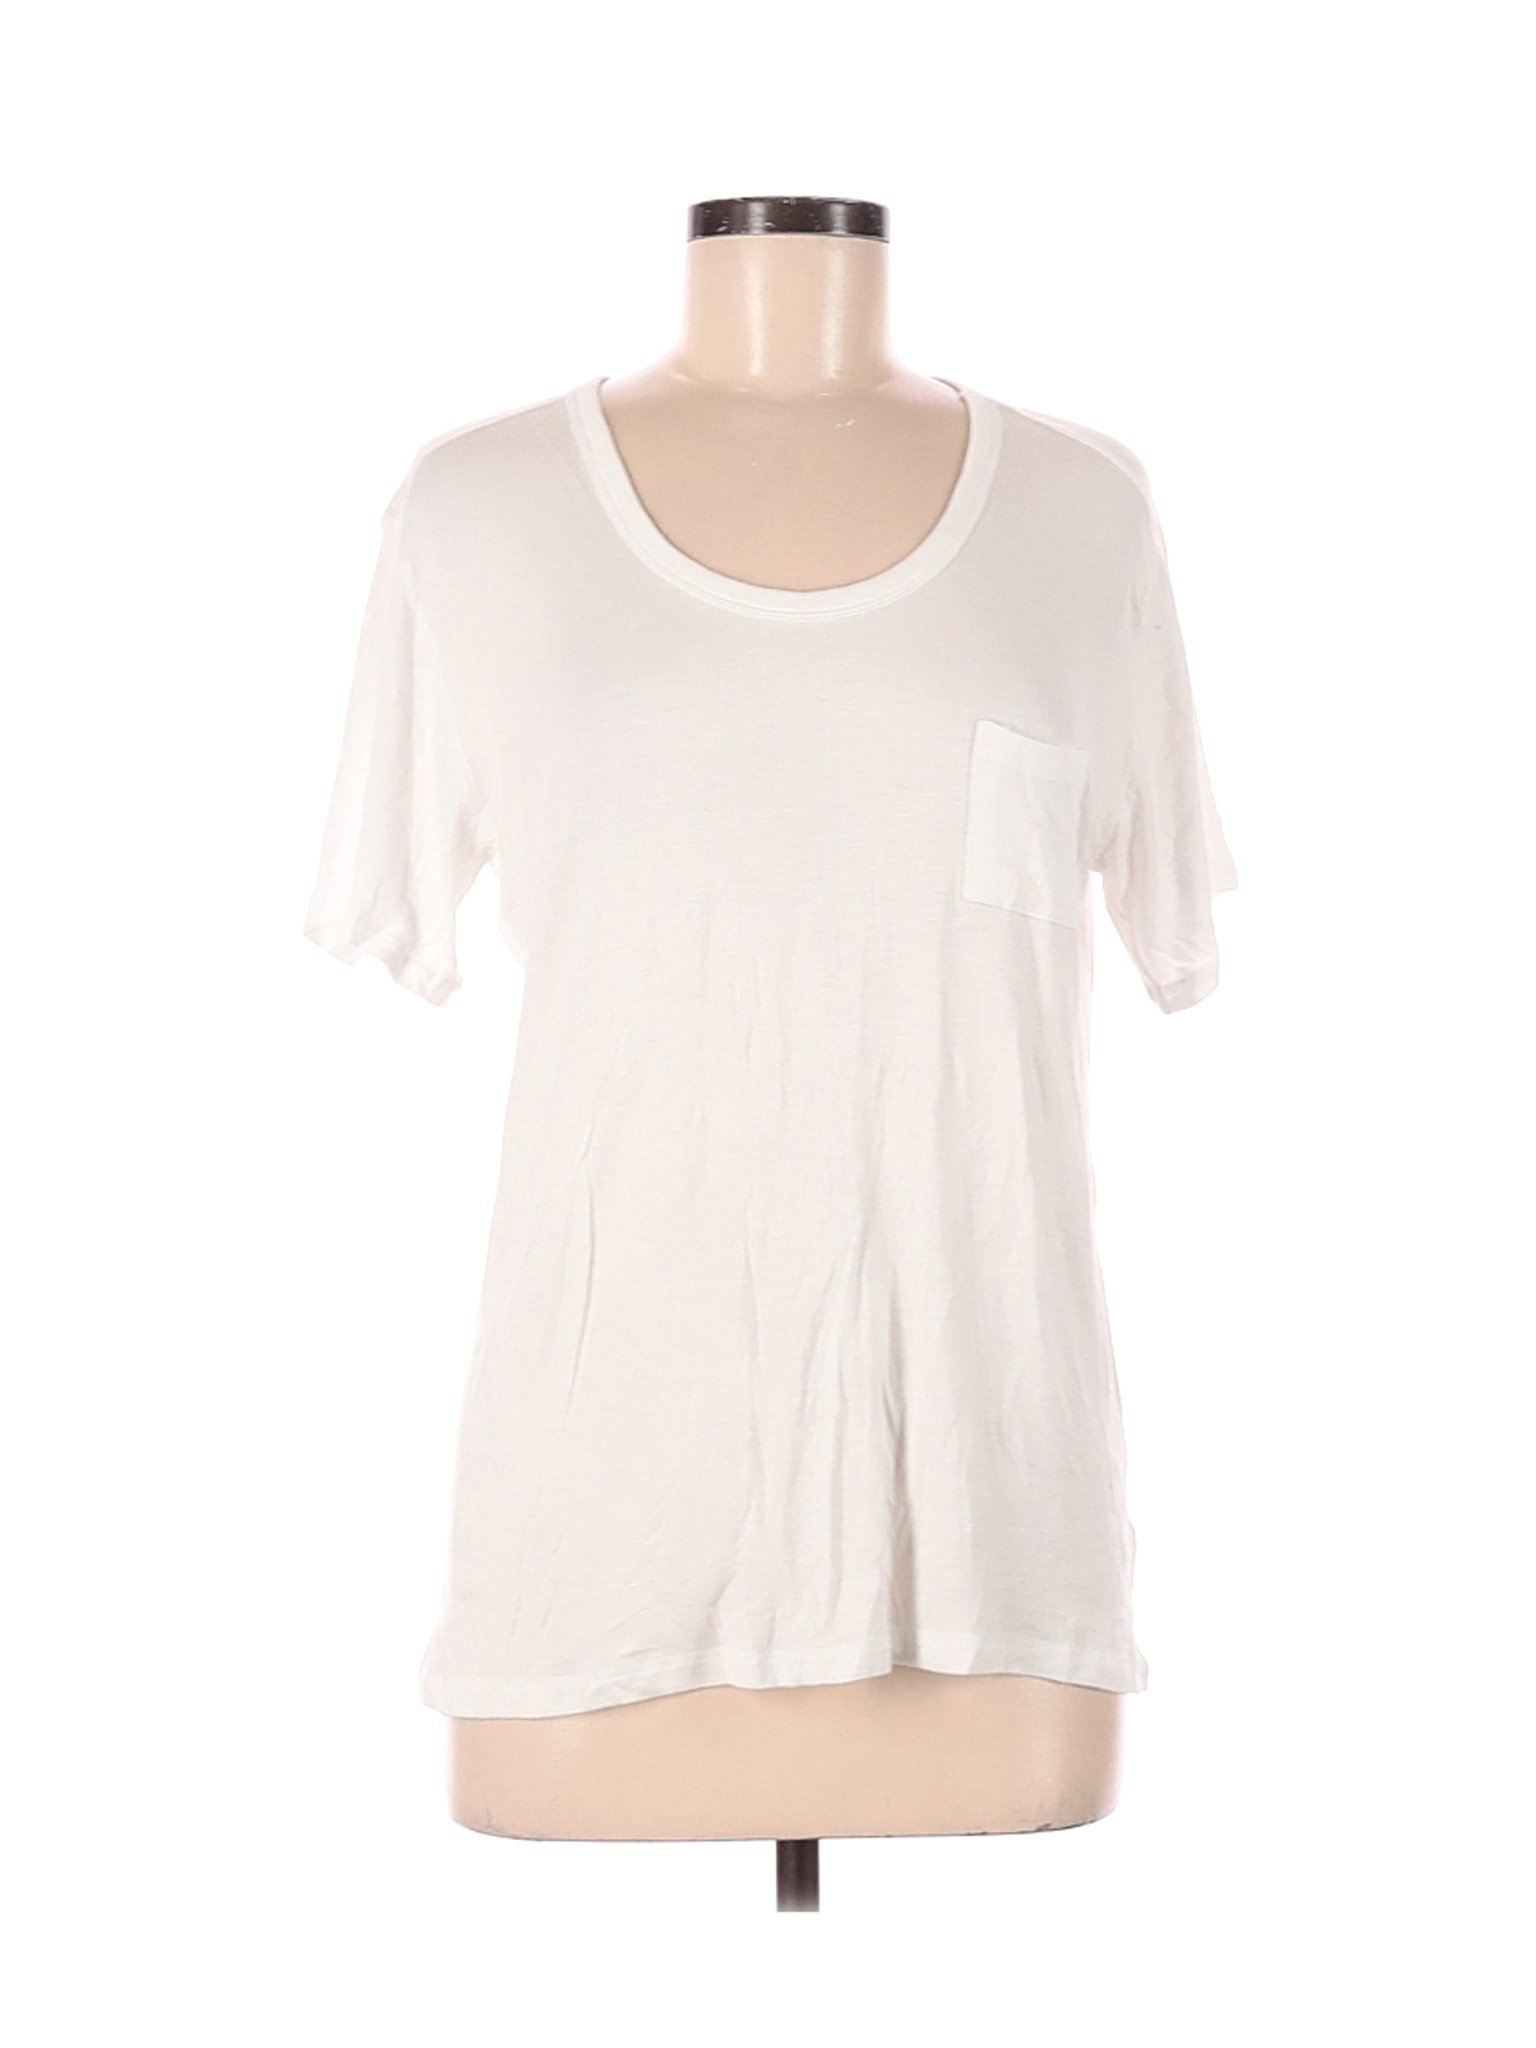 Brandy Melville Women White Short Sleeve T-Shirt One Size | eBay